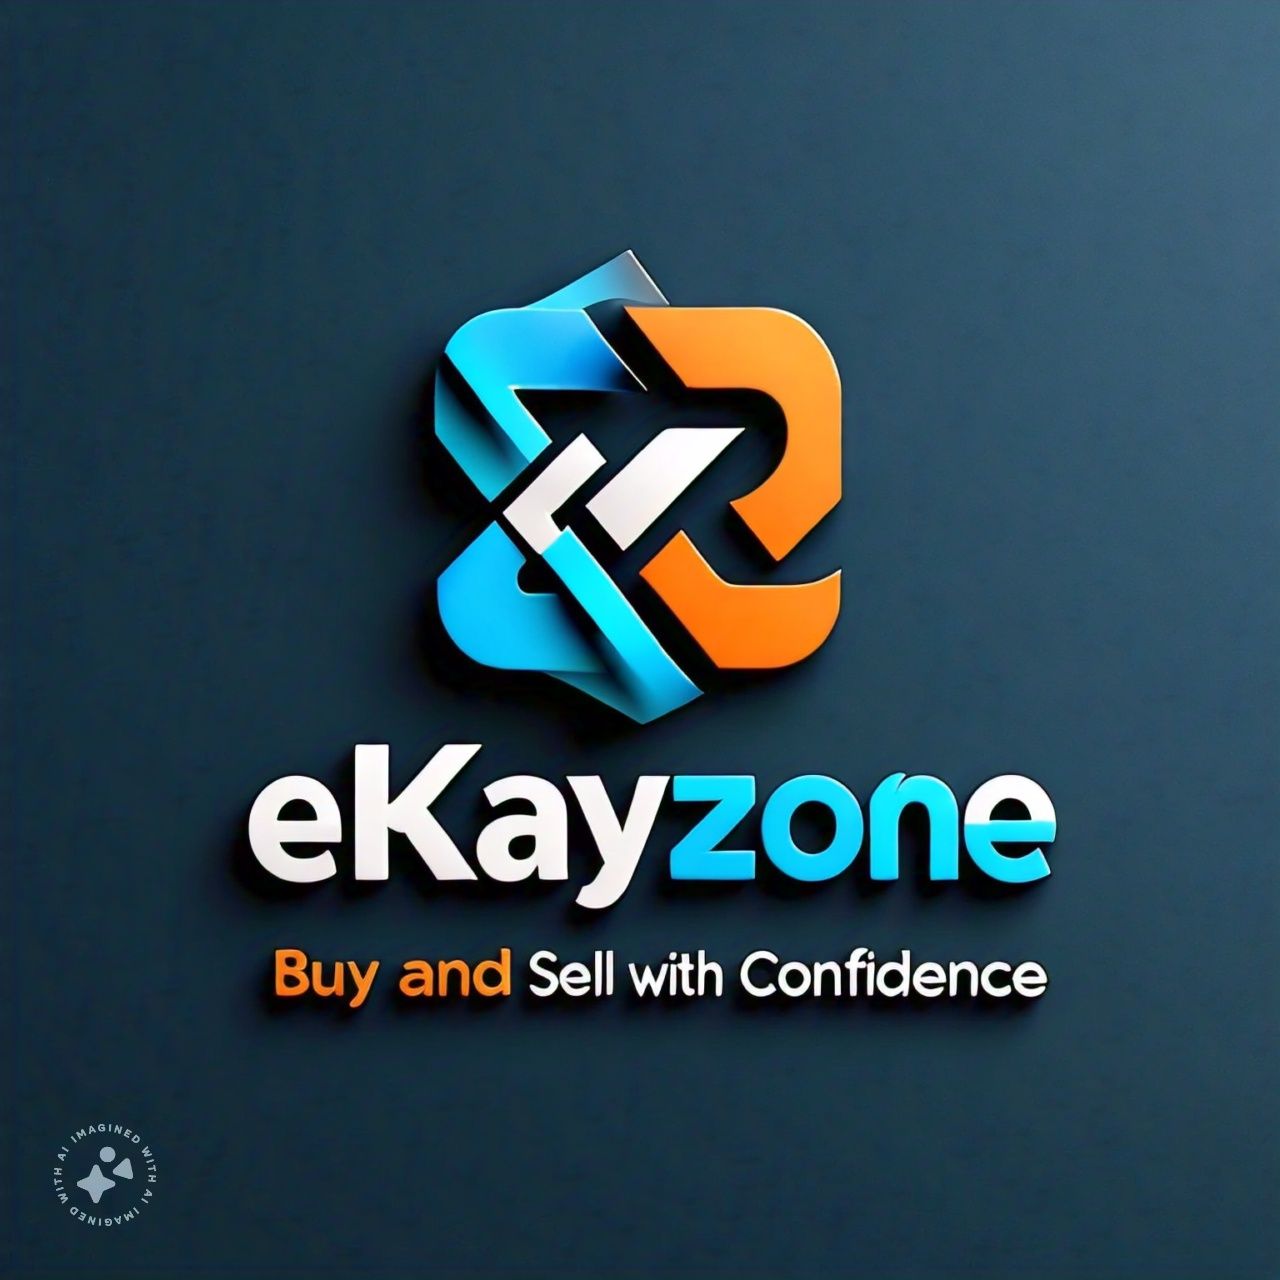 eKayzone: The Ultimate Free South African Community Marketplac